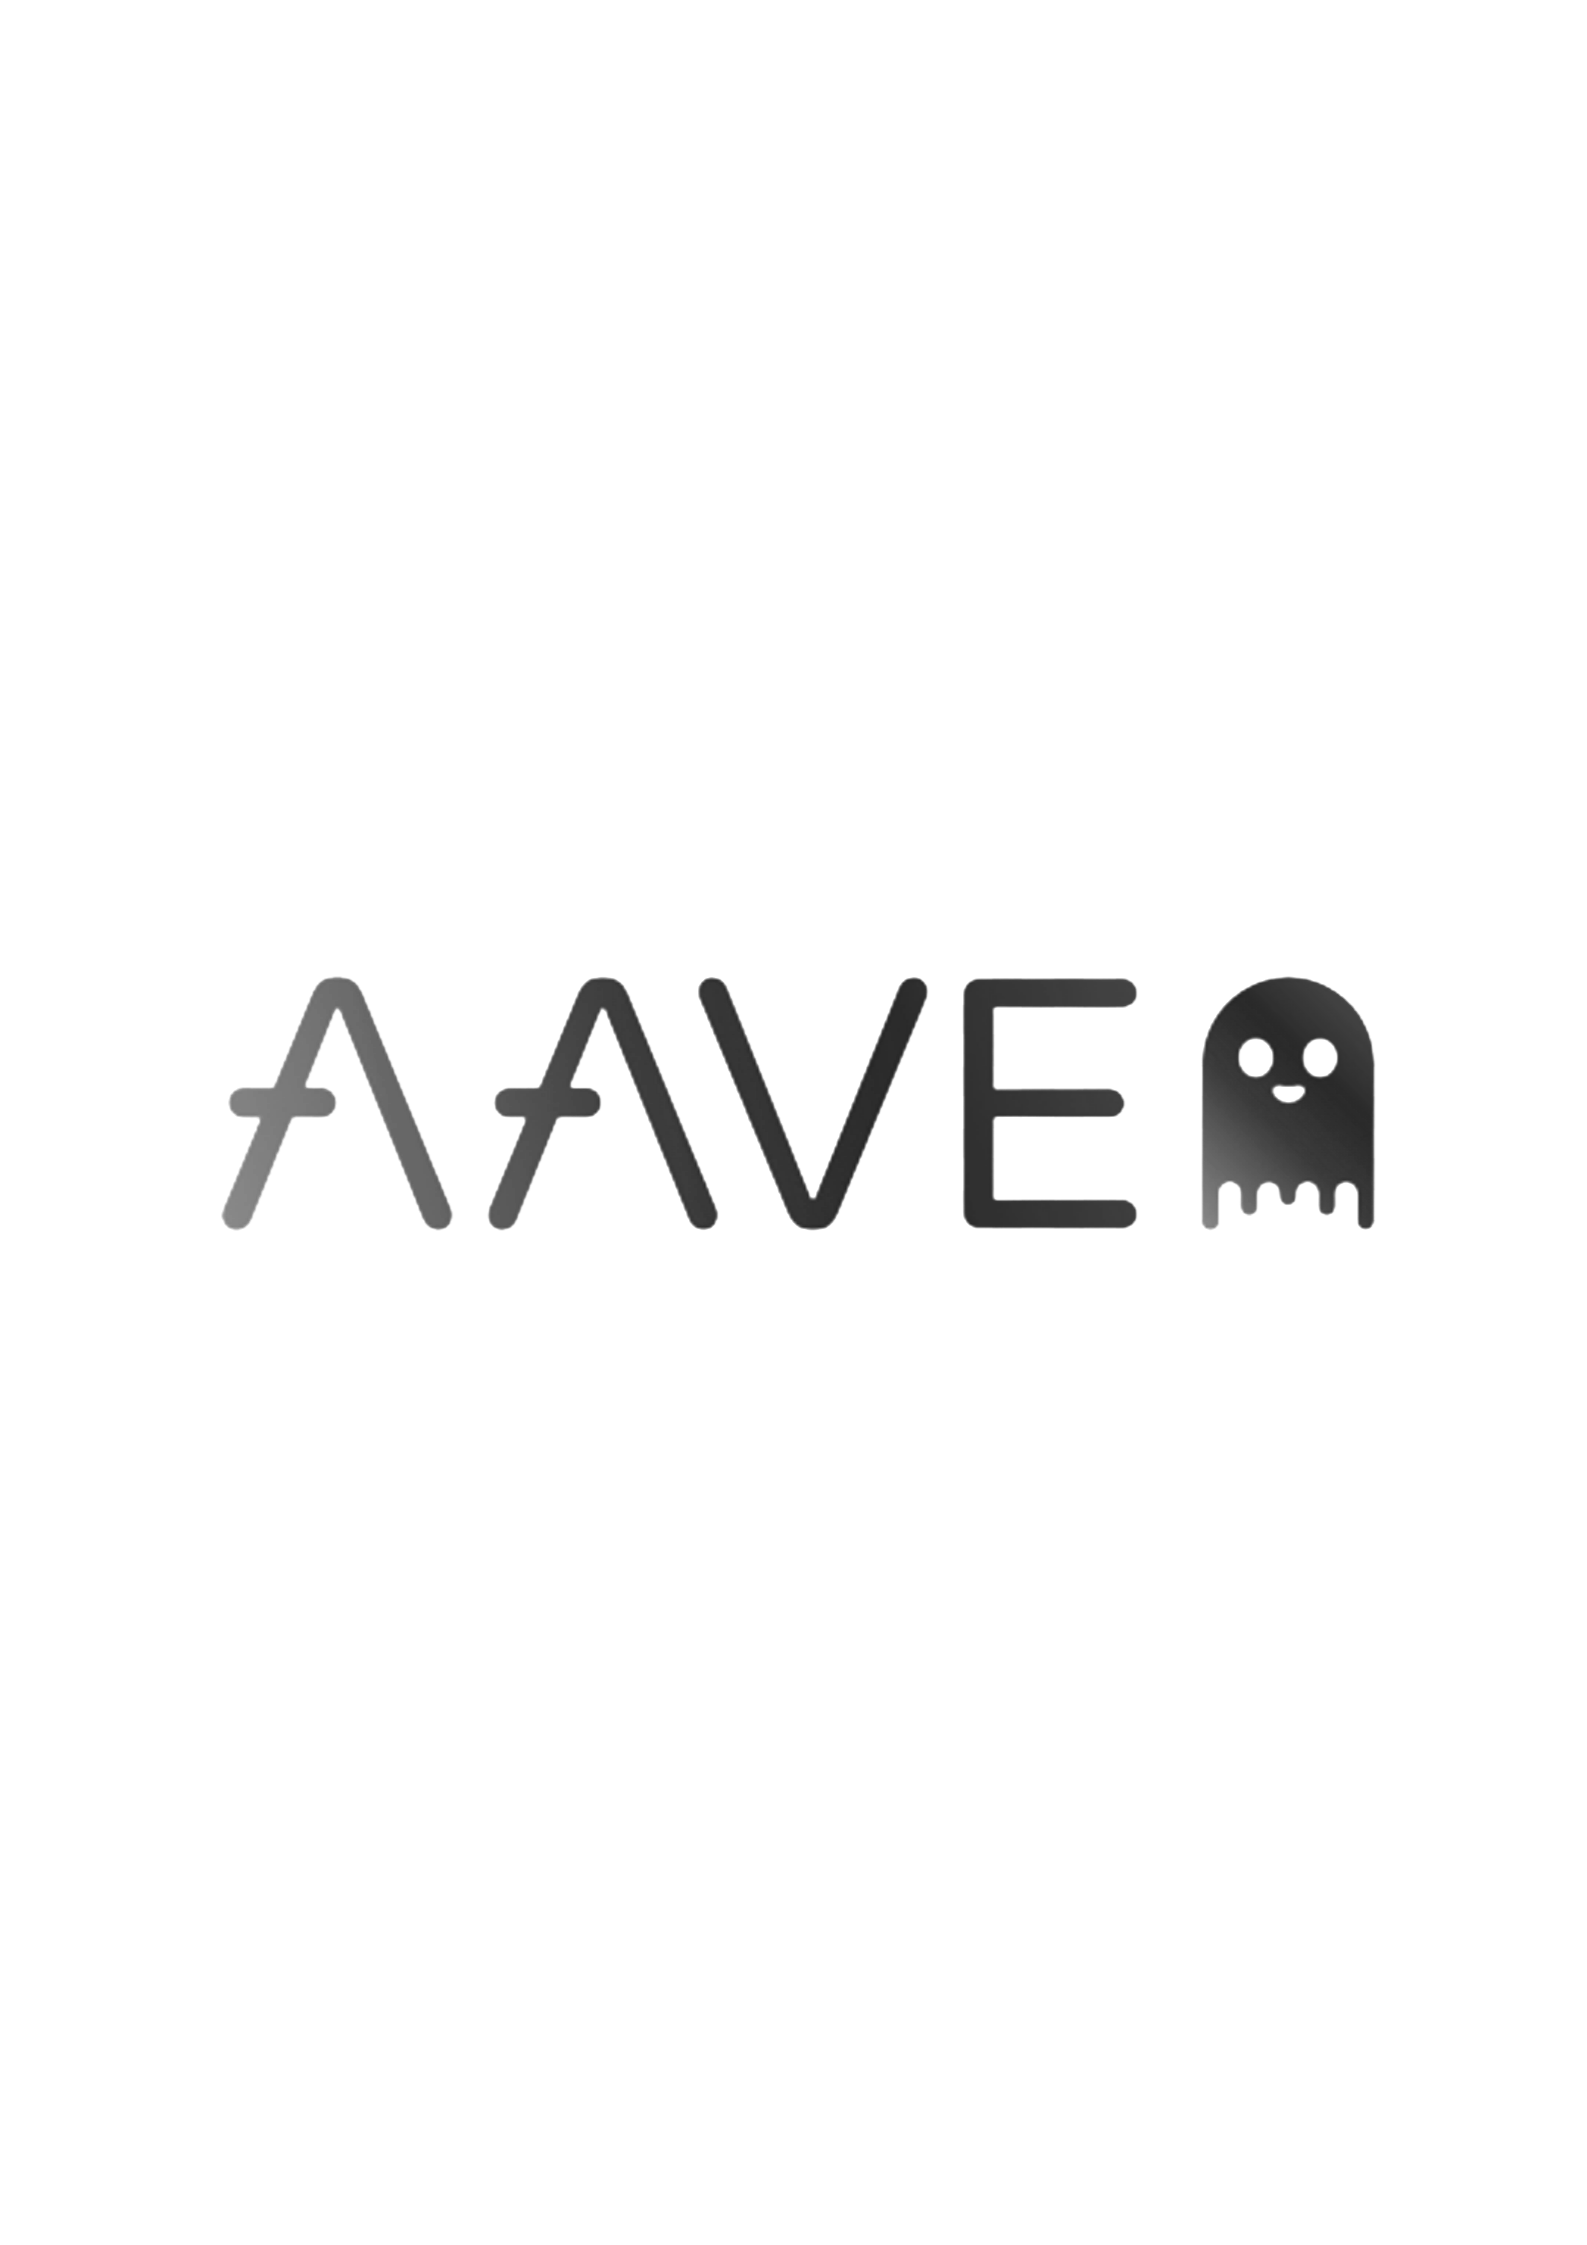 Aave.com mv logo.png